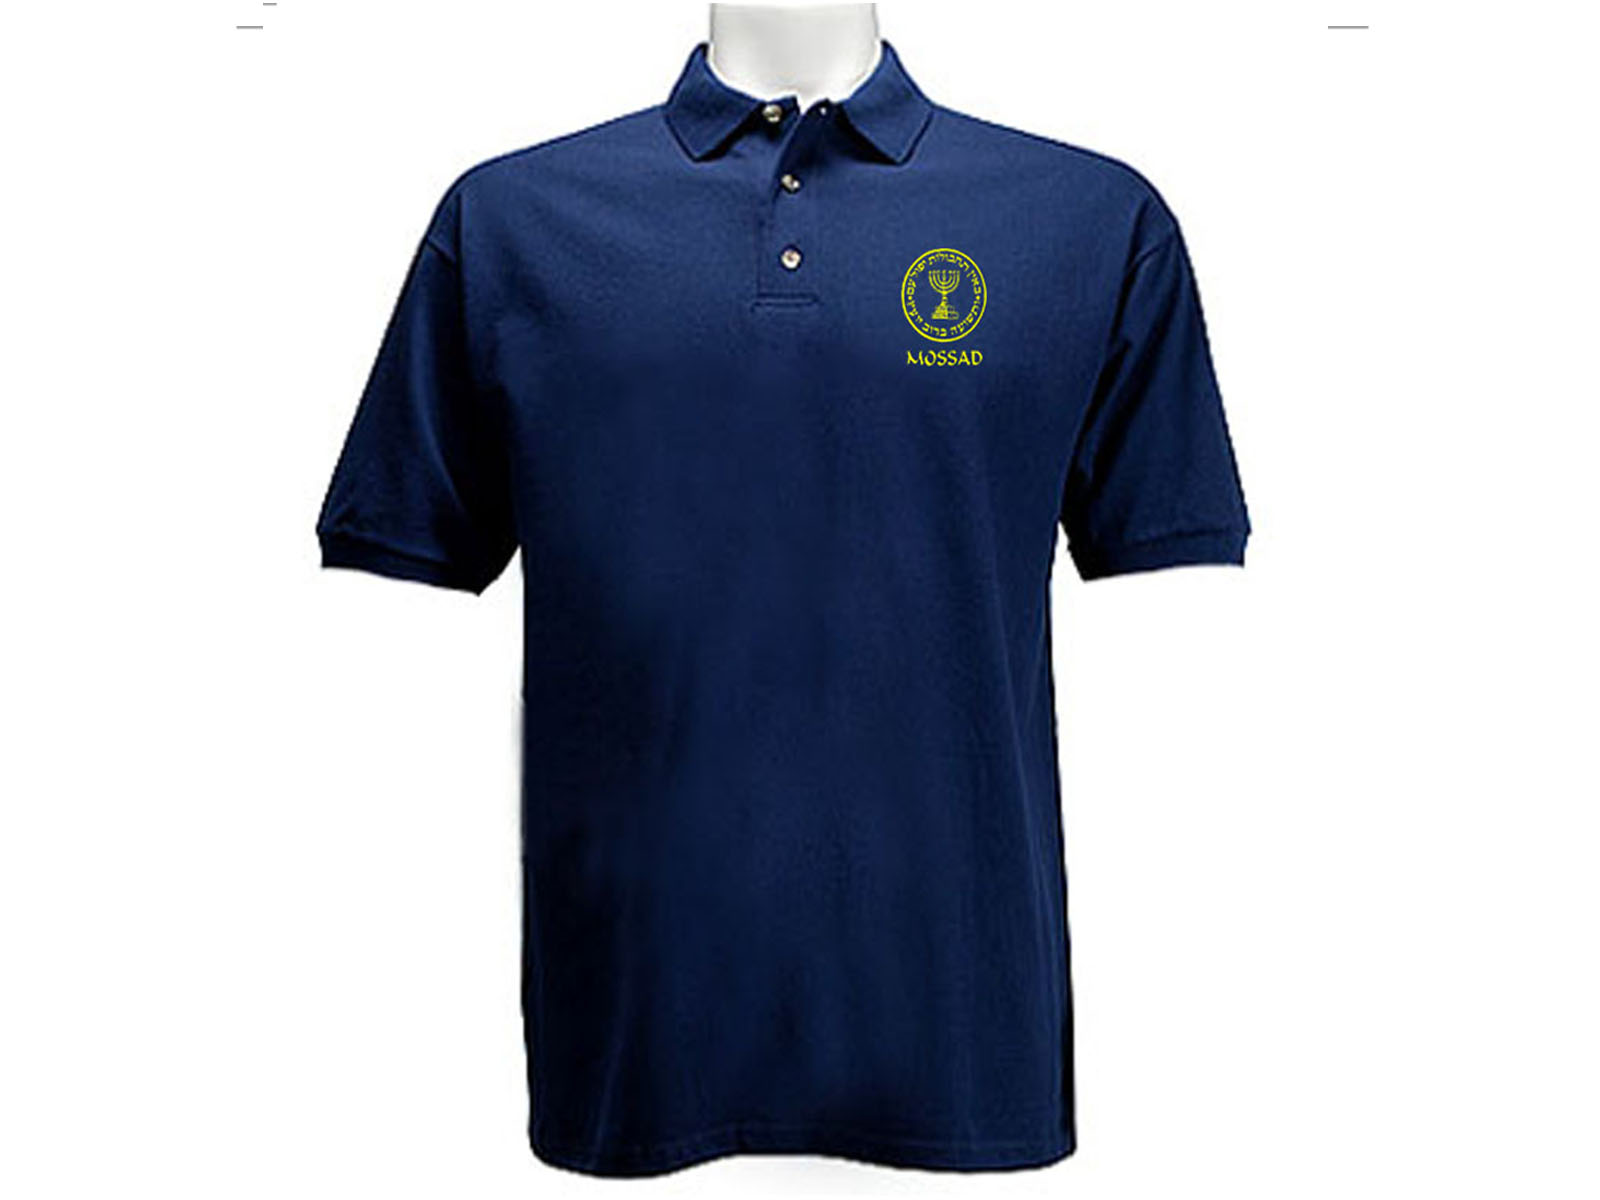 Israeli CIA Intelligence Agency Mossad polo style navy blue t-shirt